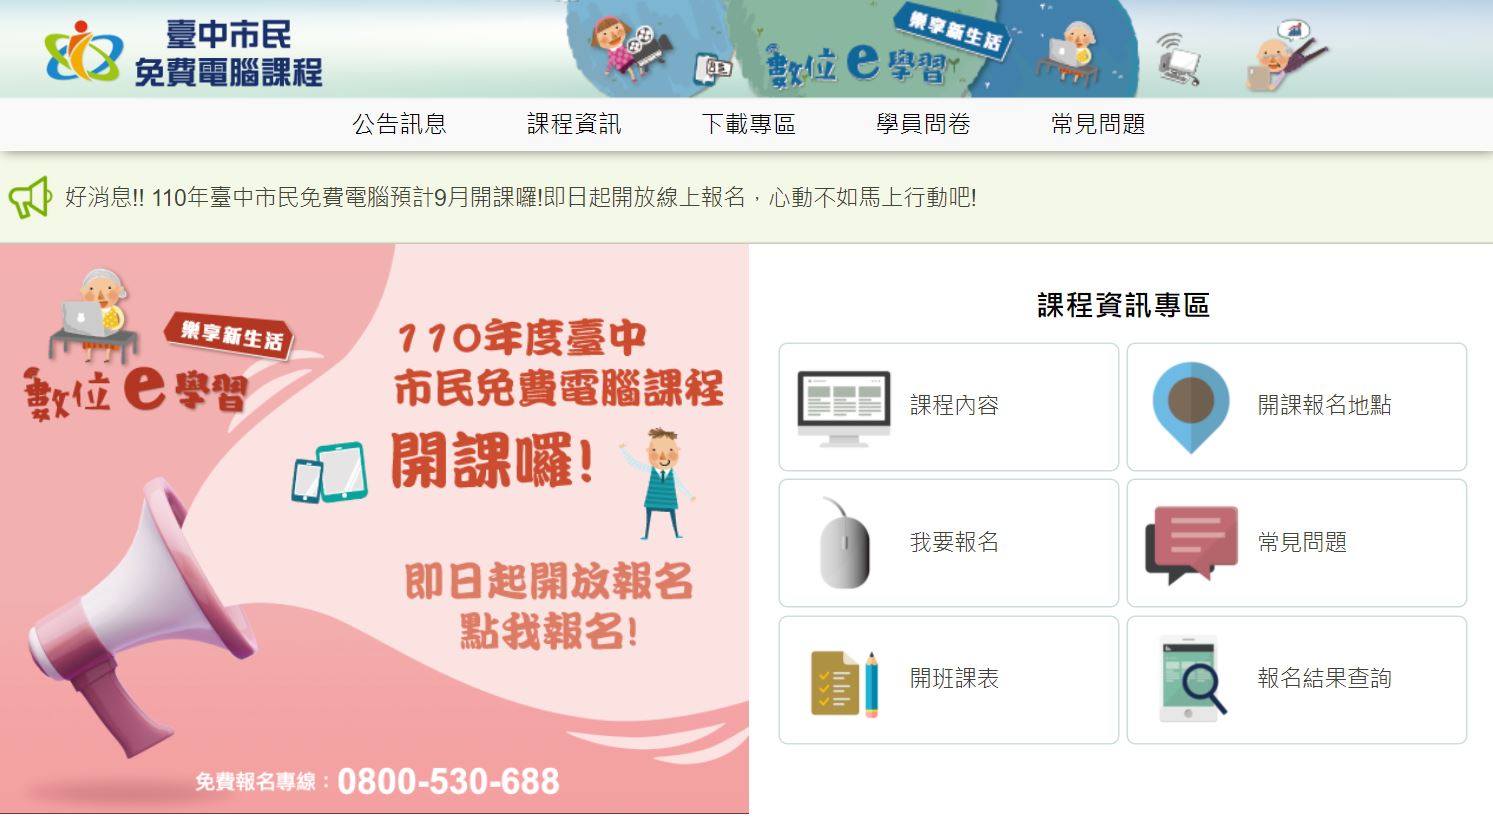 Penduduk baru dipersilakan untuk mendaftar kelas komputer gratis. Sumber: Diambil dari Balai Kota Taichung